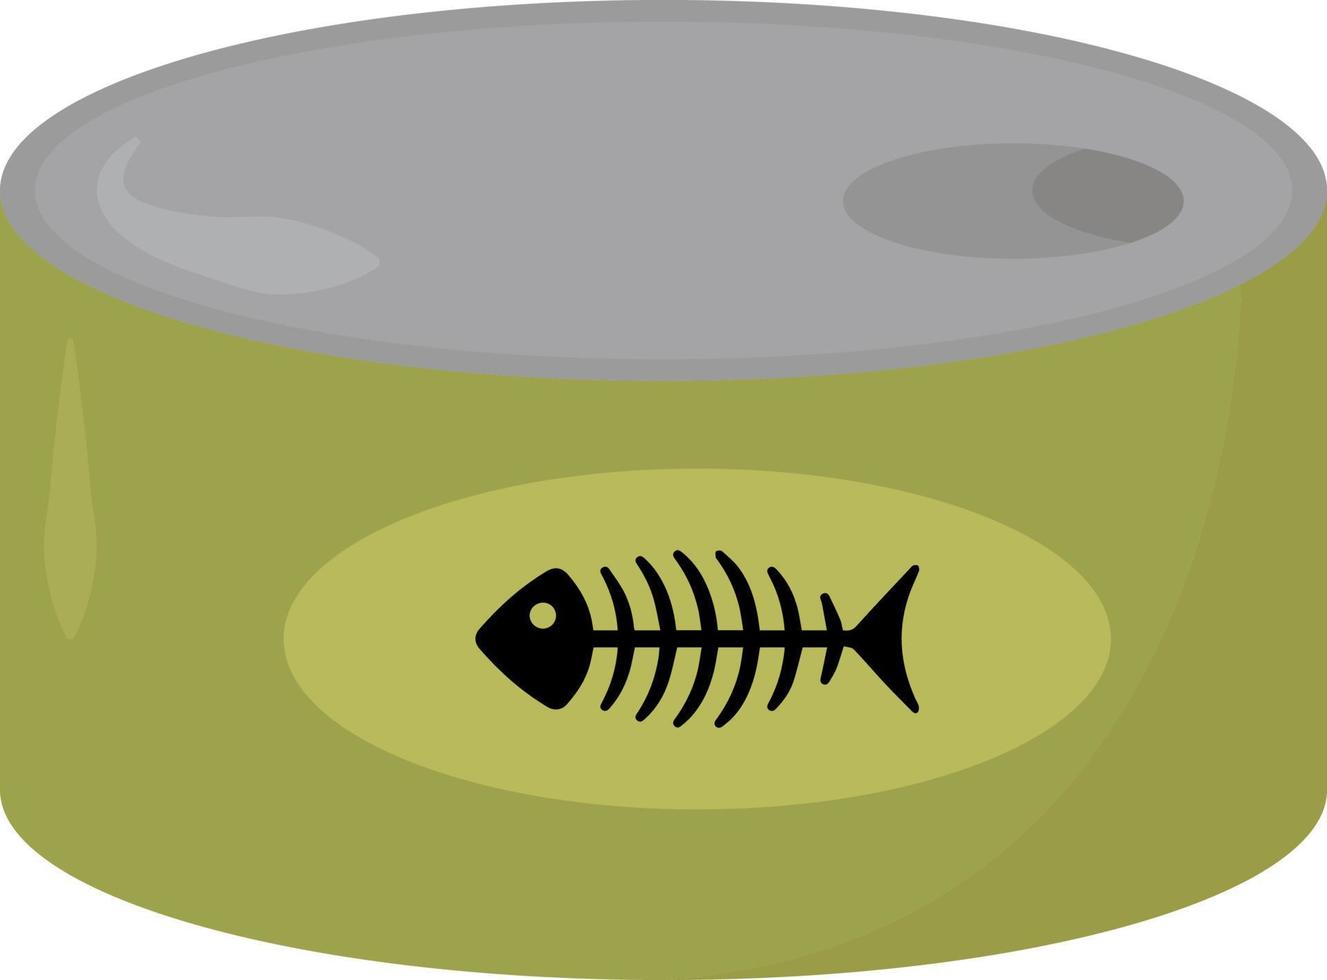 Lata de pescado, ilustración, vector sobre fondo blanco.